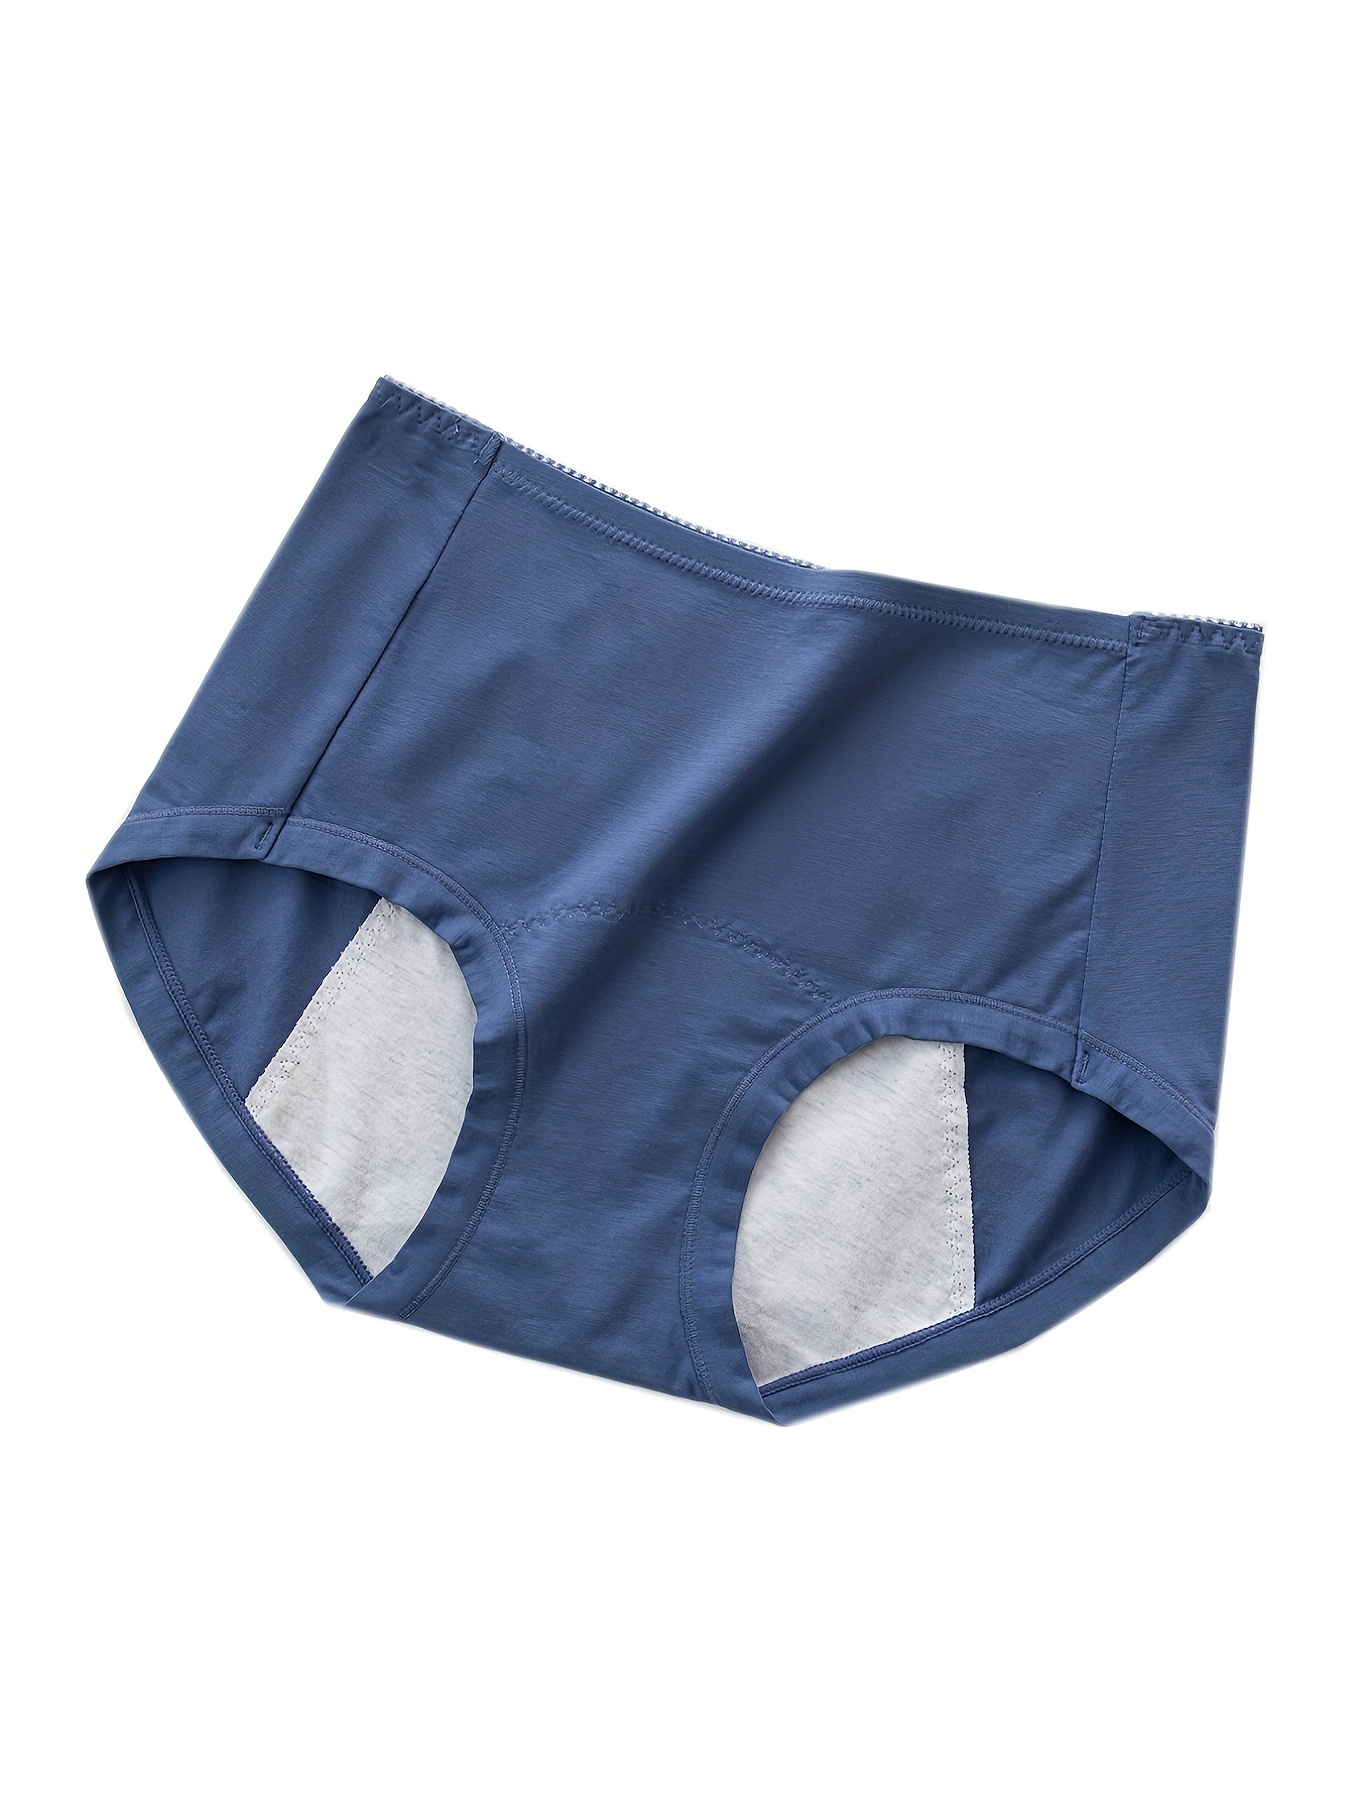 Womens Boxer Briefs Underwear Anti Side Leakage Cotton Mid Waist Lace Briefs  Panties Black M 